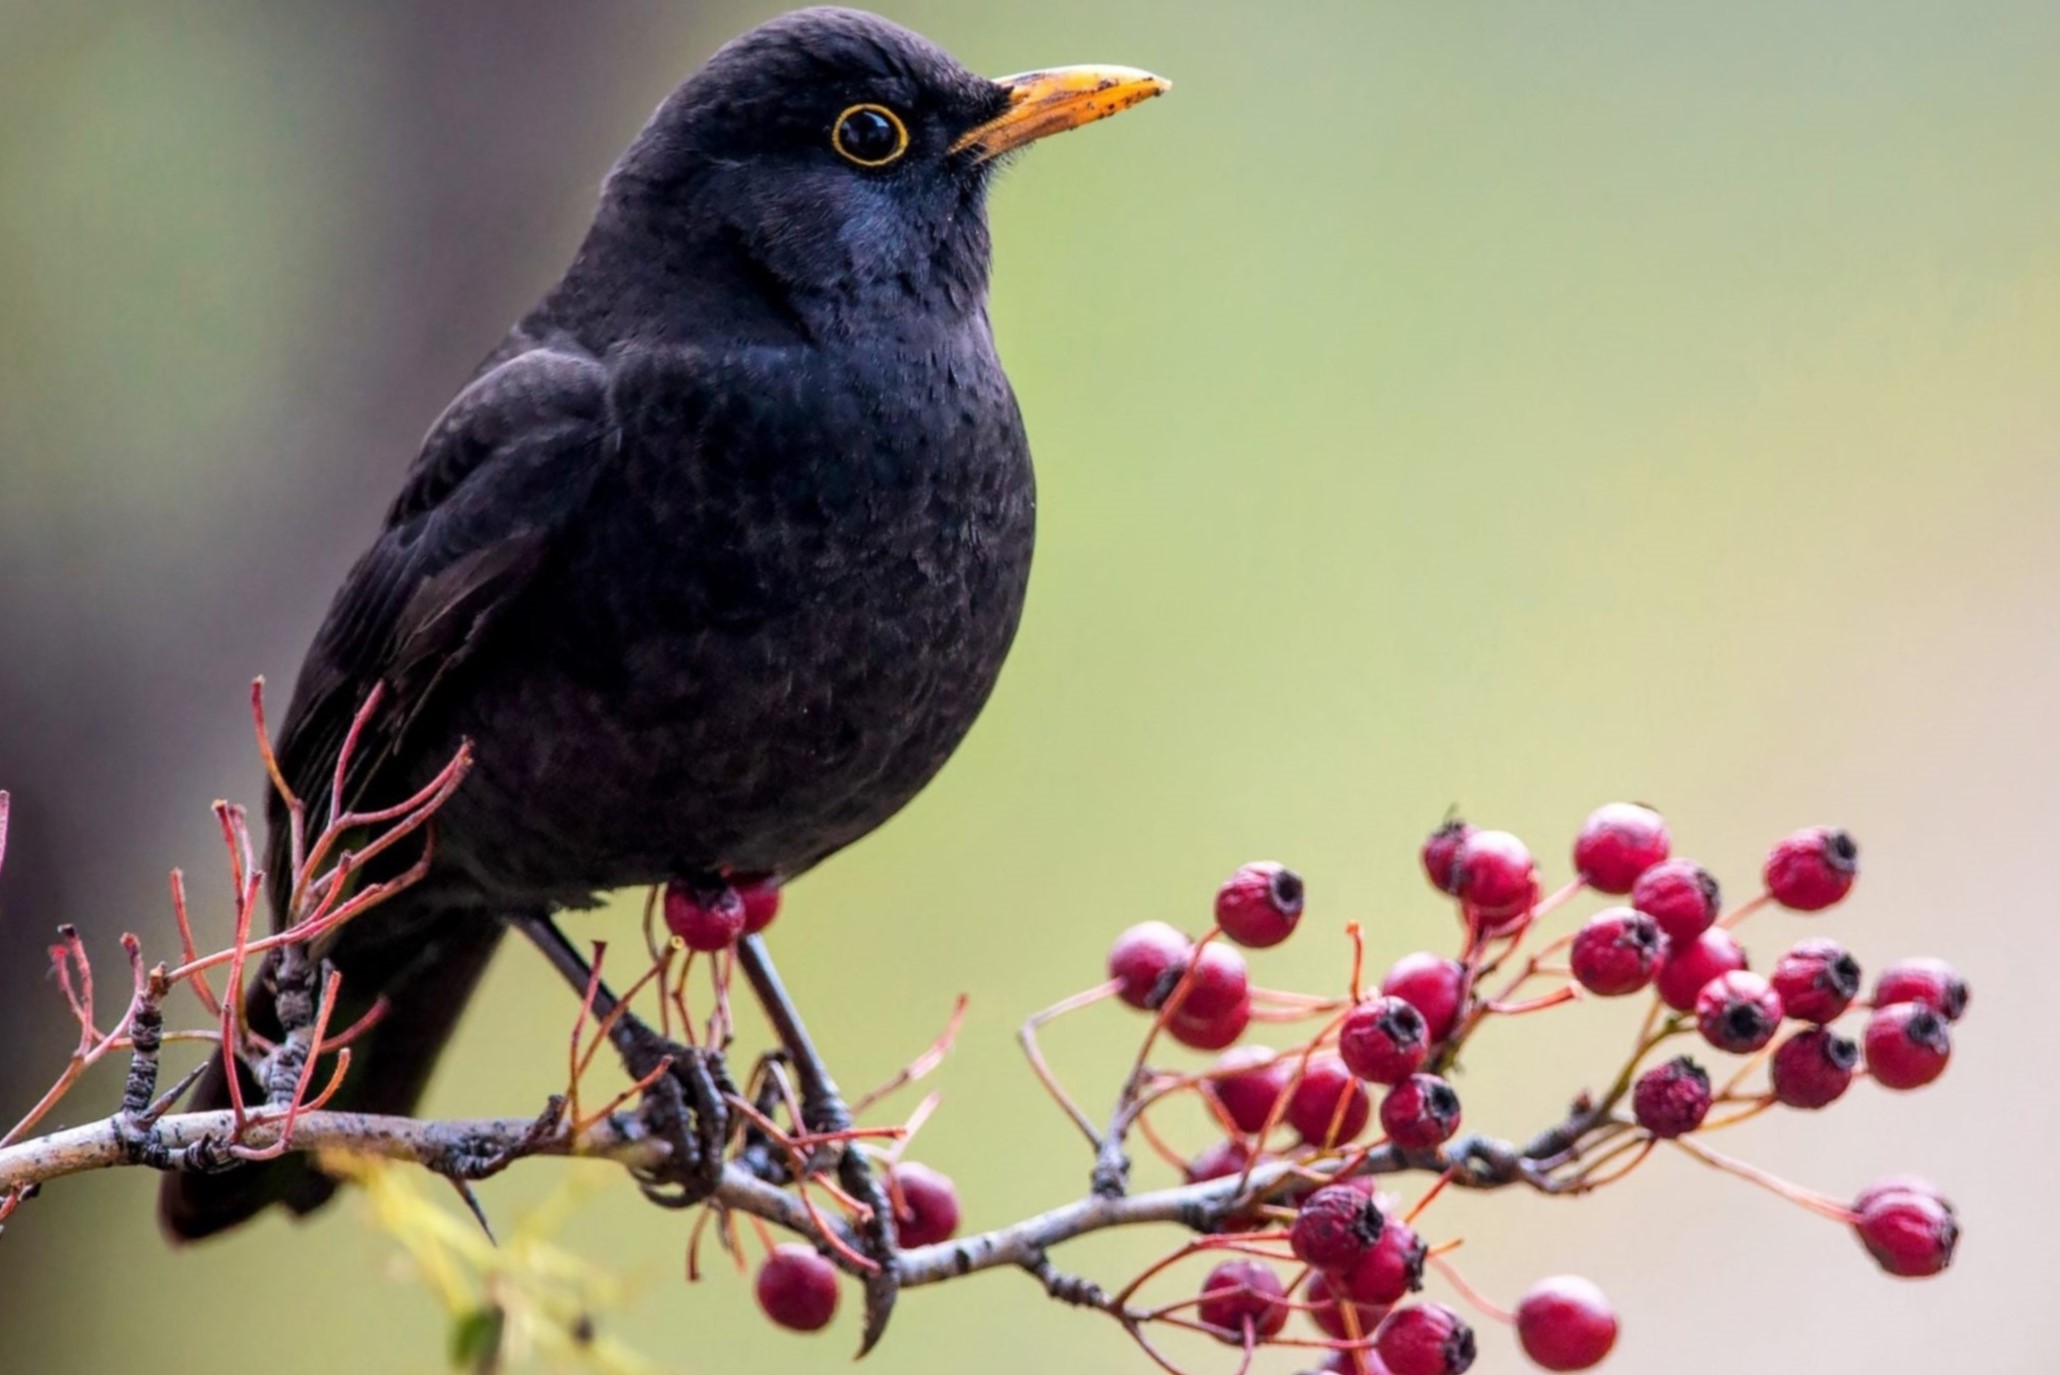 How Do Birds Help Spread The Seeds Of Berries